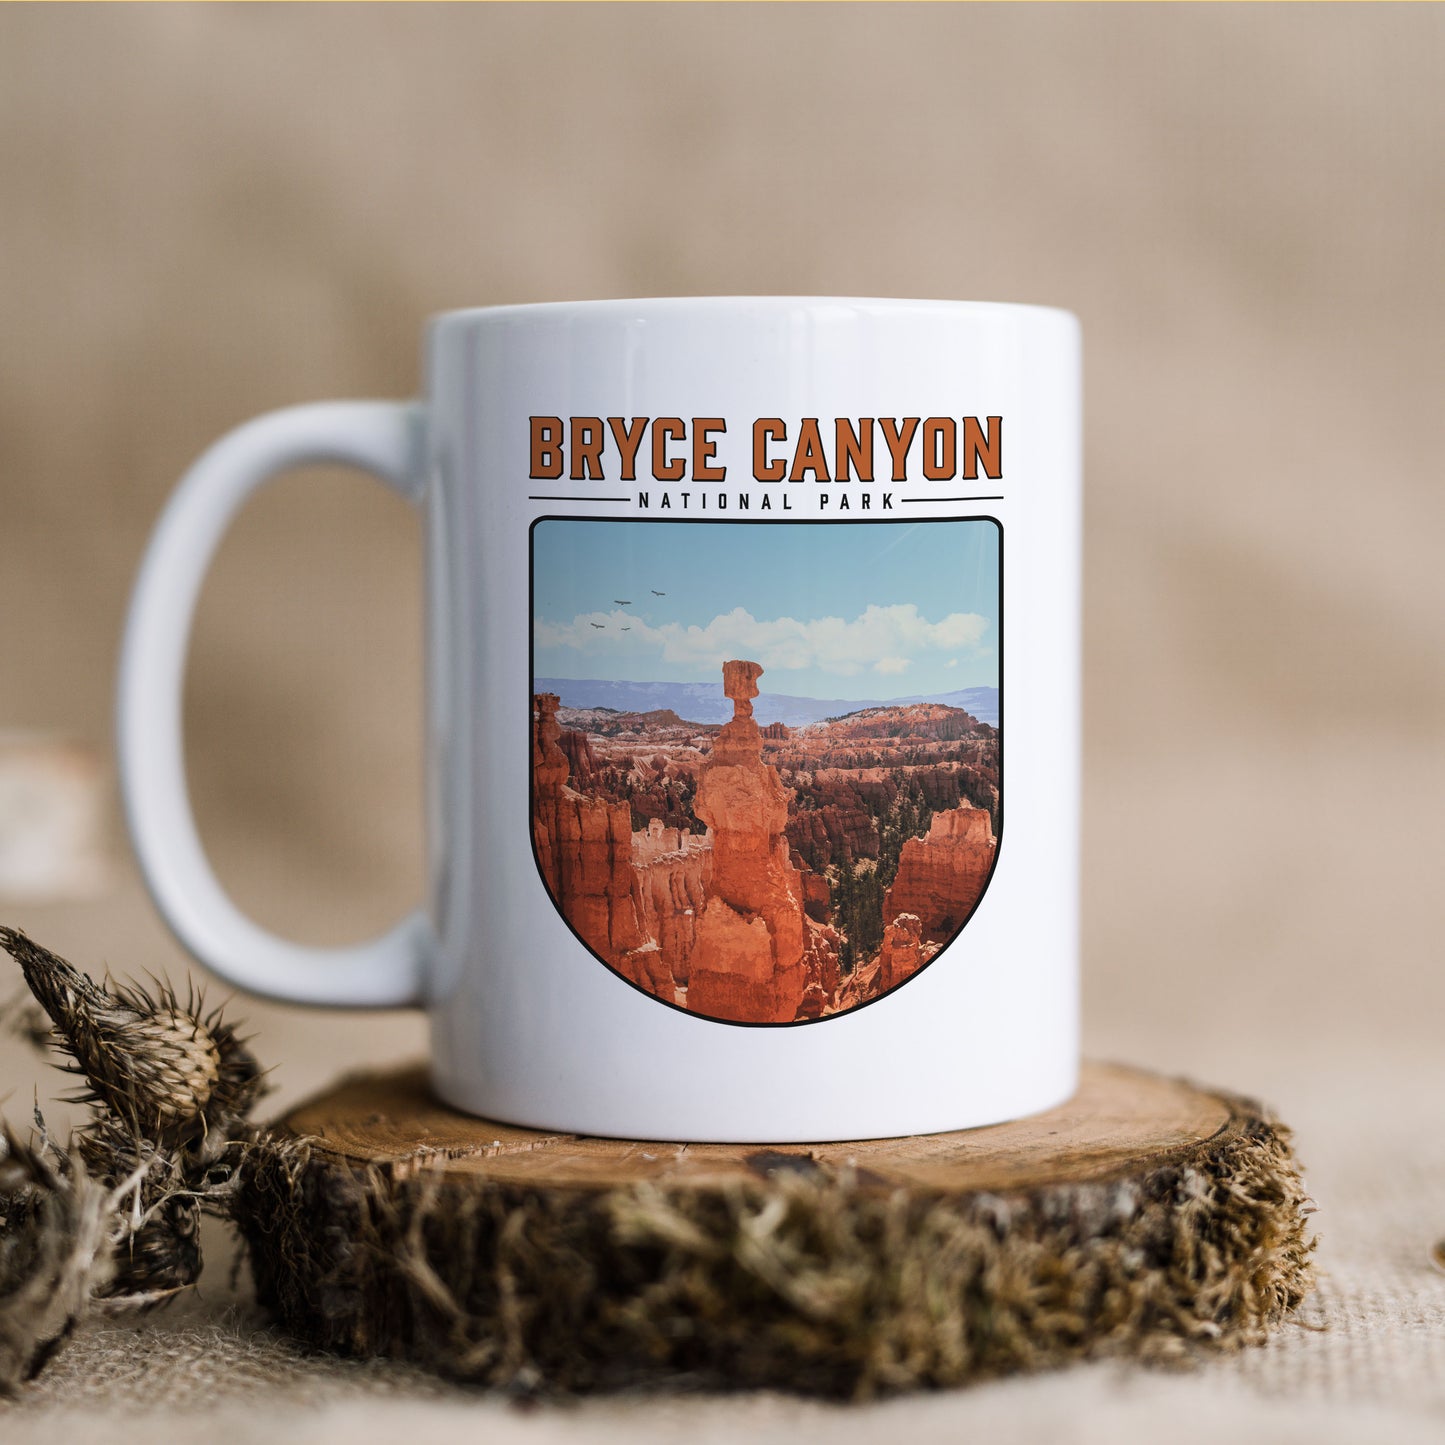 Bryce Canyon National Park - Ceramic Mug